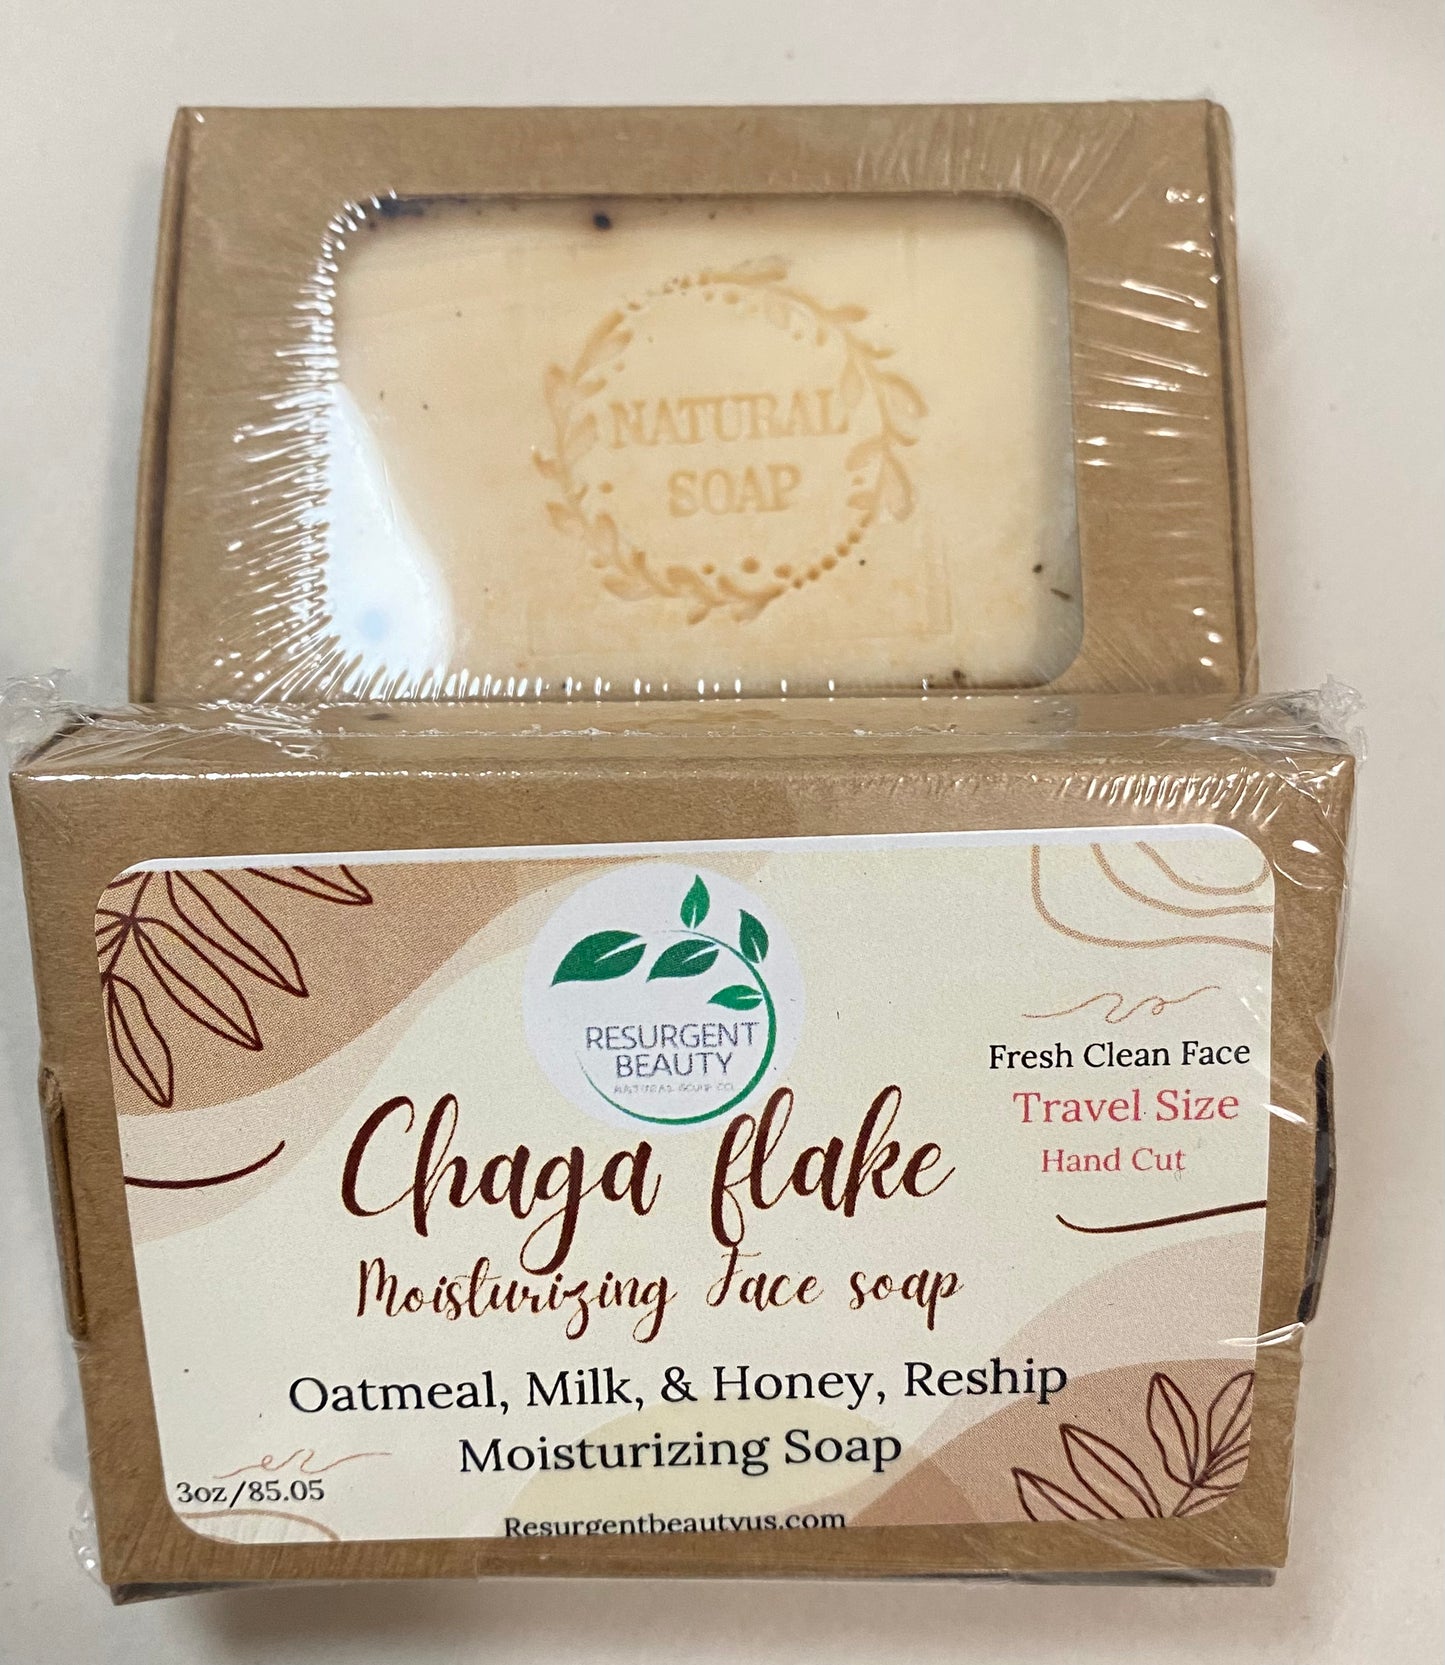 Chaga flake - Moisturizing Face Soap